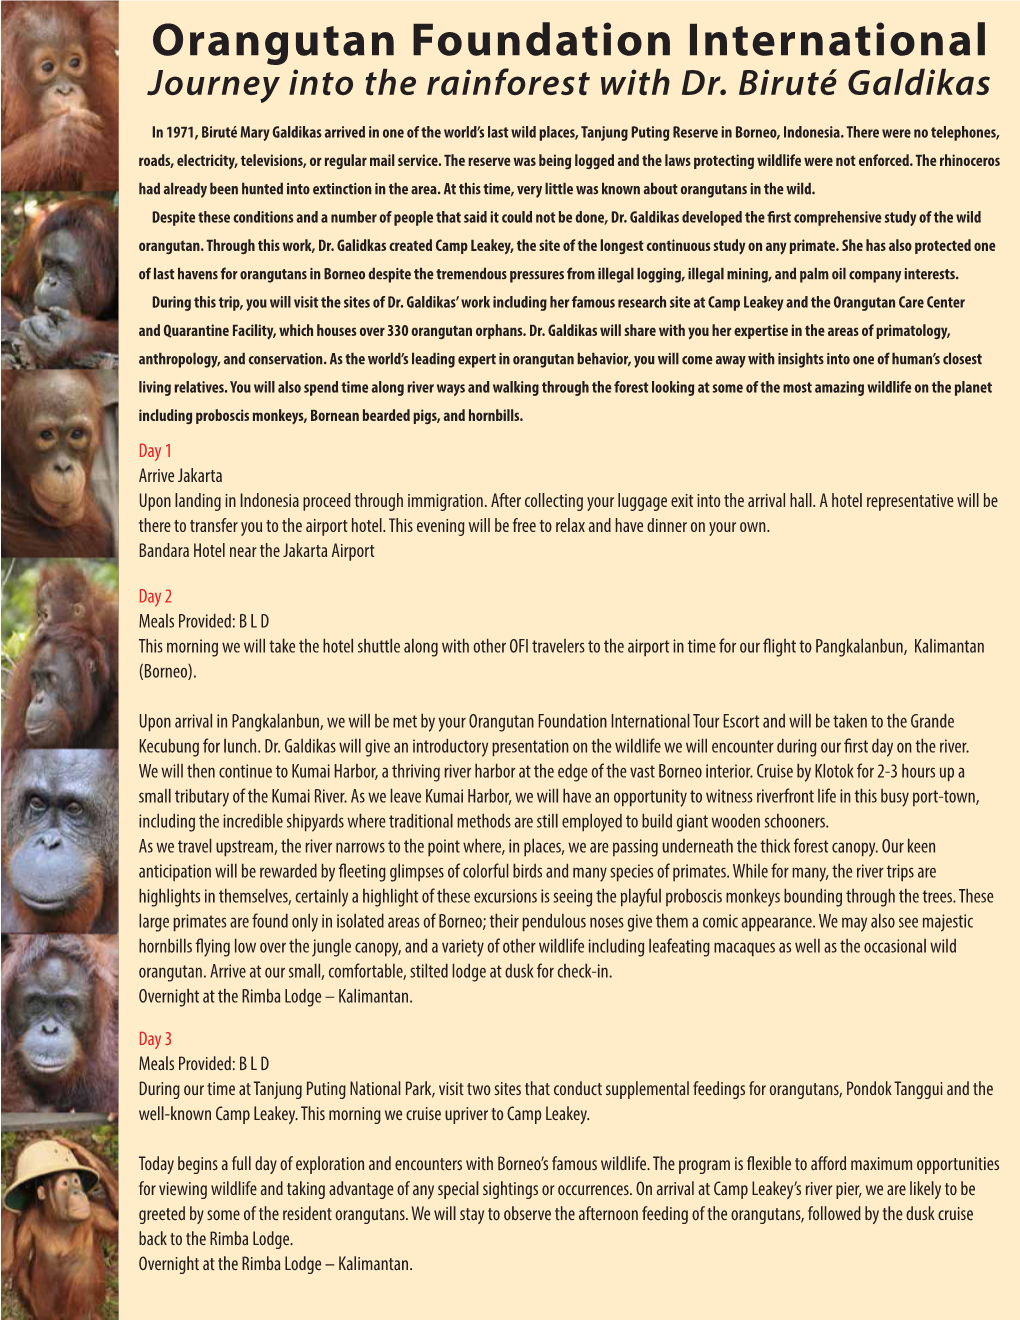 Orangutan Foundation International Journey Into the Rainforest with Dr